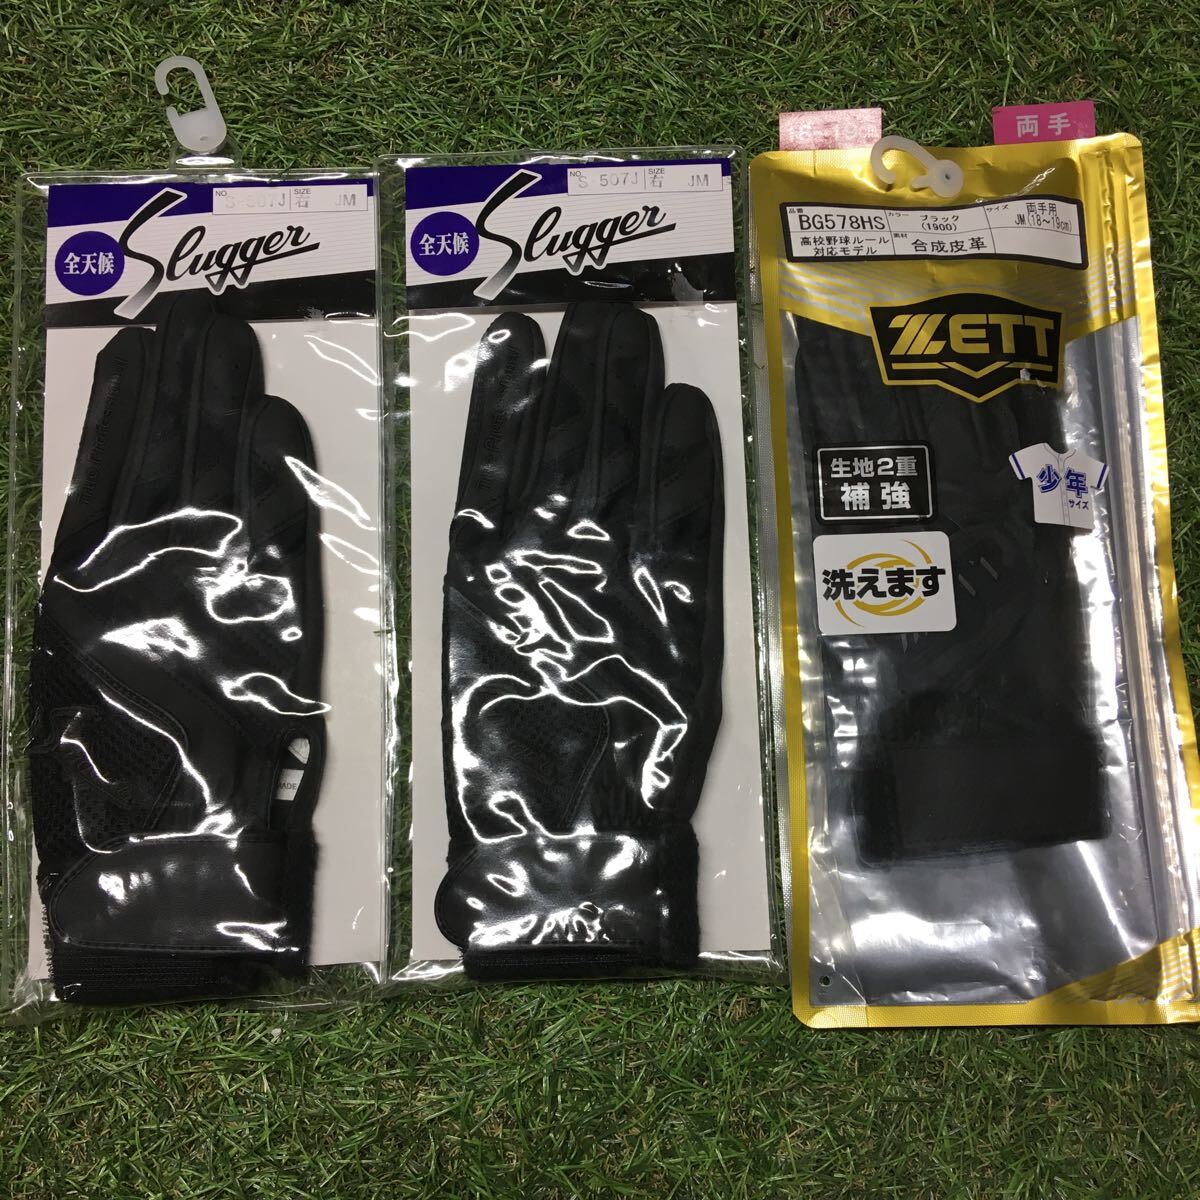 RK816-A41 Slugger スラッガー S-507J 左JM 右JM ZETT BG578HS 両手用JM 高校野球対応 野球 ベースボール 3点まとめ 未使用 展示品 手袋の画像1